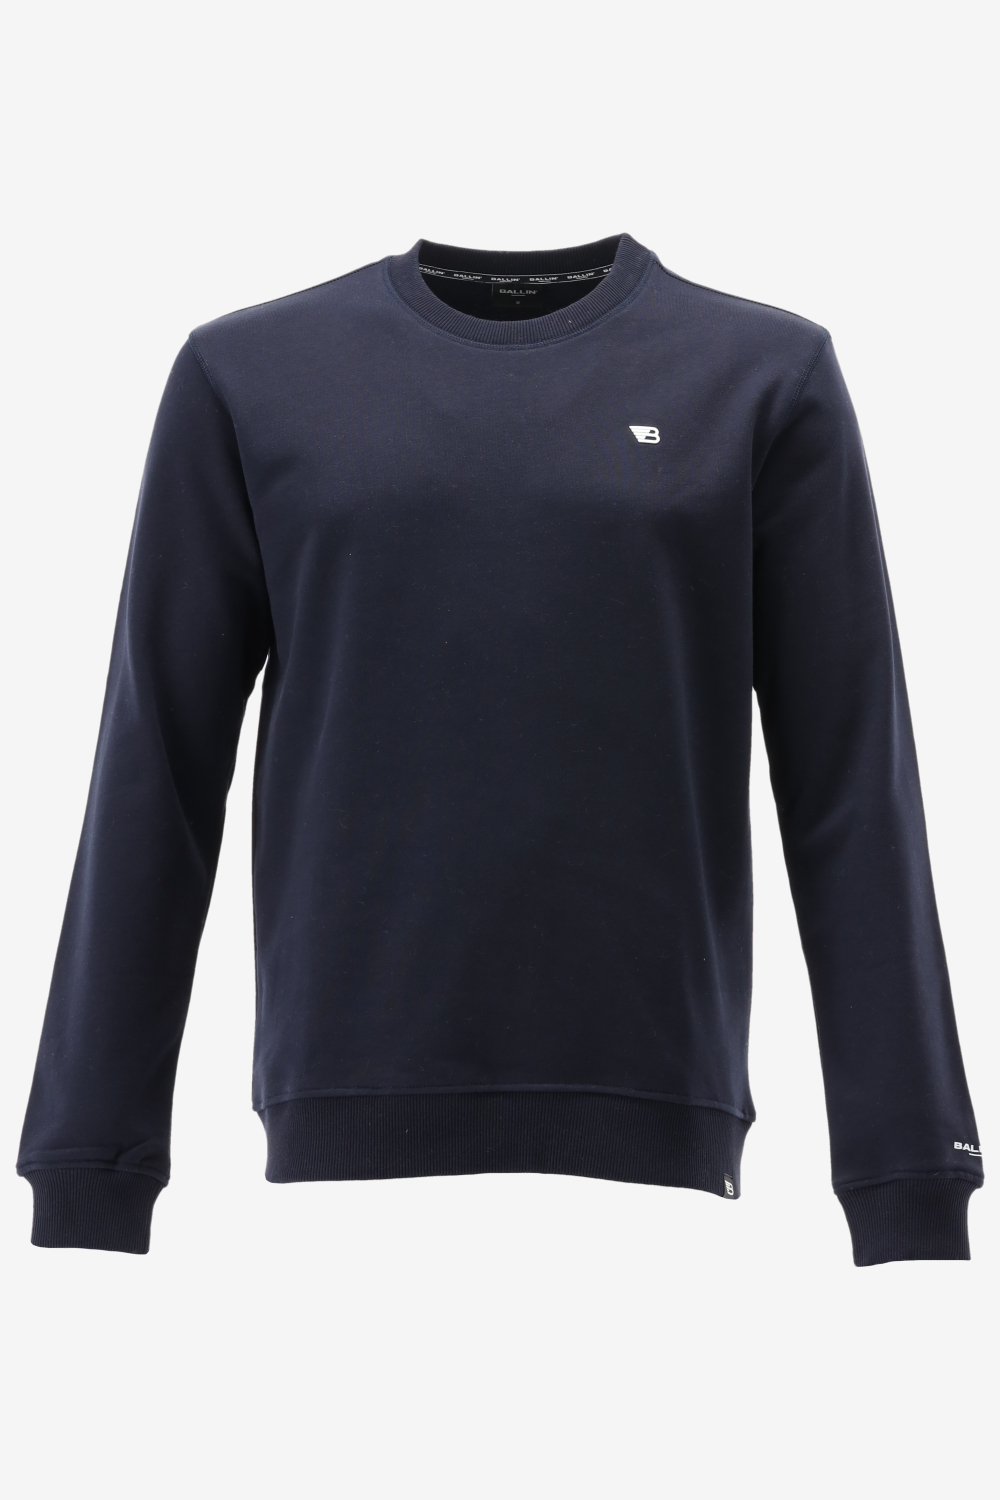 Ballin Amsterdam - Heren Regular Fit Original Sweater - Blauw - Maat L